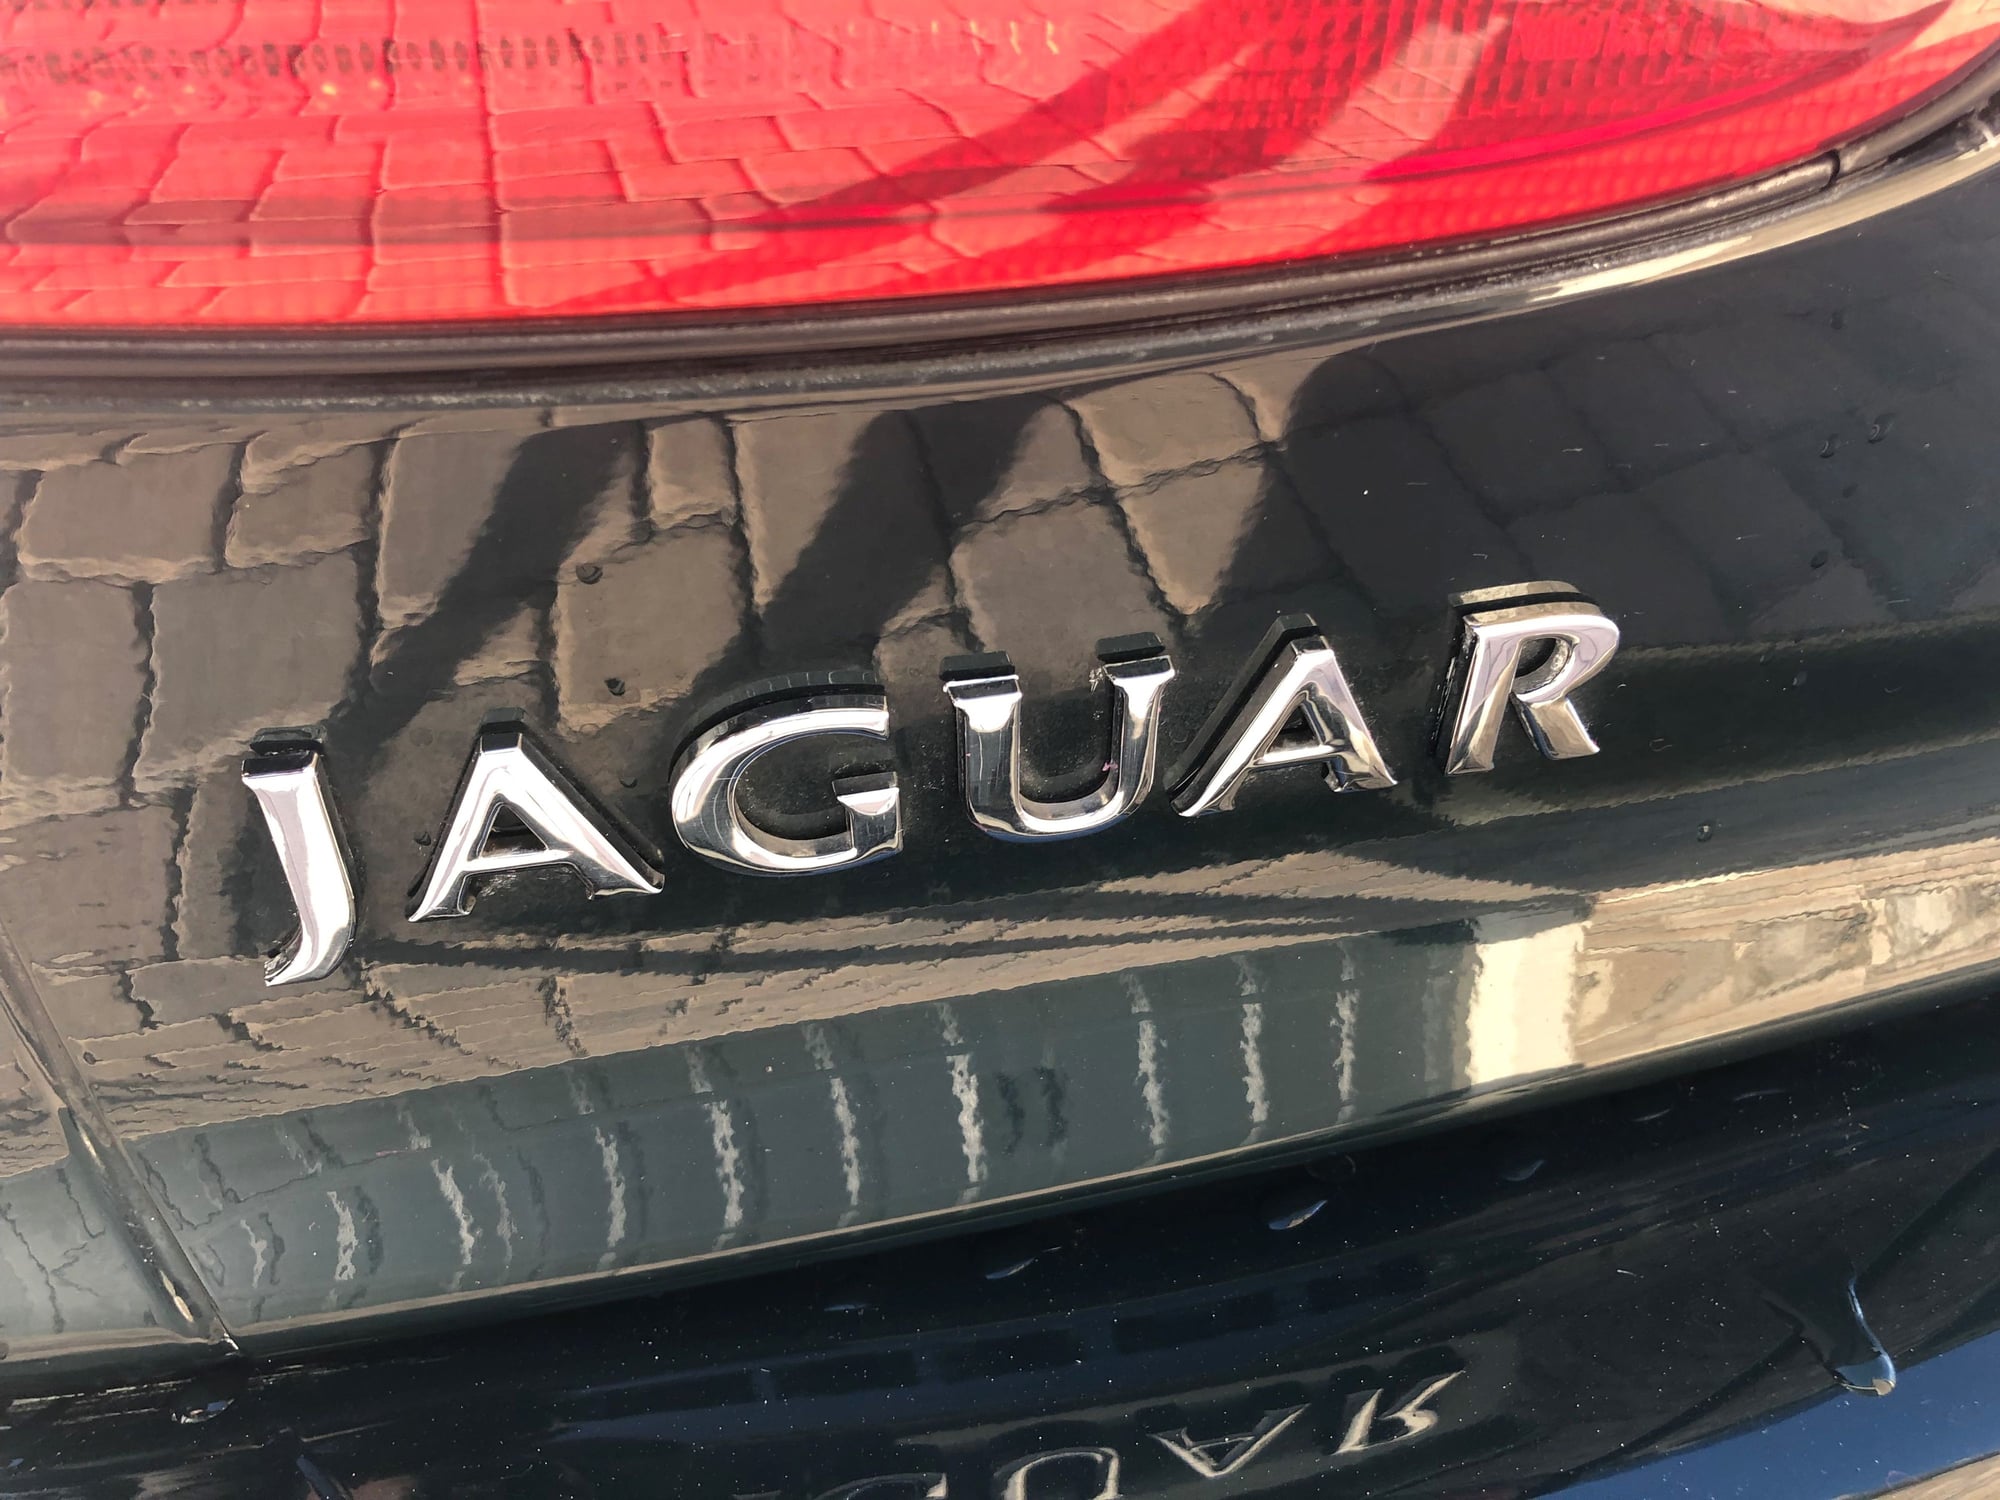 1999 Jaguar XK8 - 1999 Jaguar XK8 - Used - VIN SAJGX2044XC039354 - 48,300 Miles - 8 cyl - 2WD - Automatic - Convertible - Other - Peoria, AZ 85383, United States